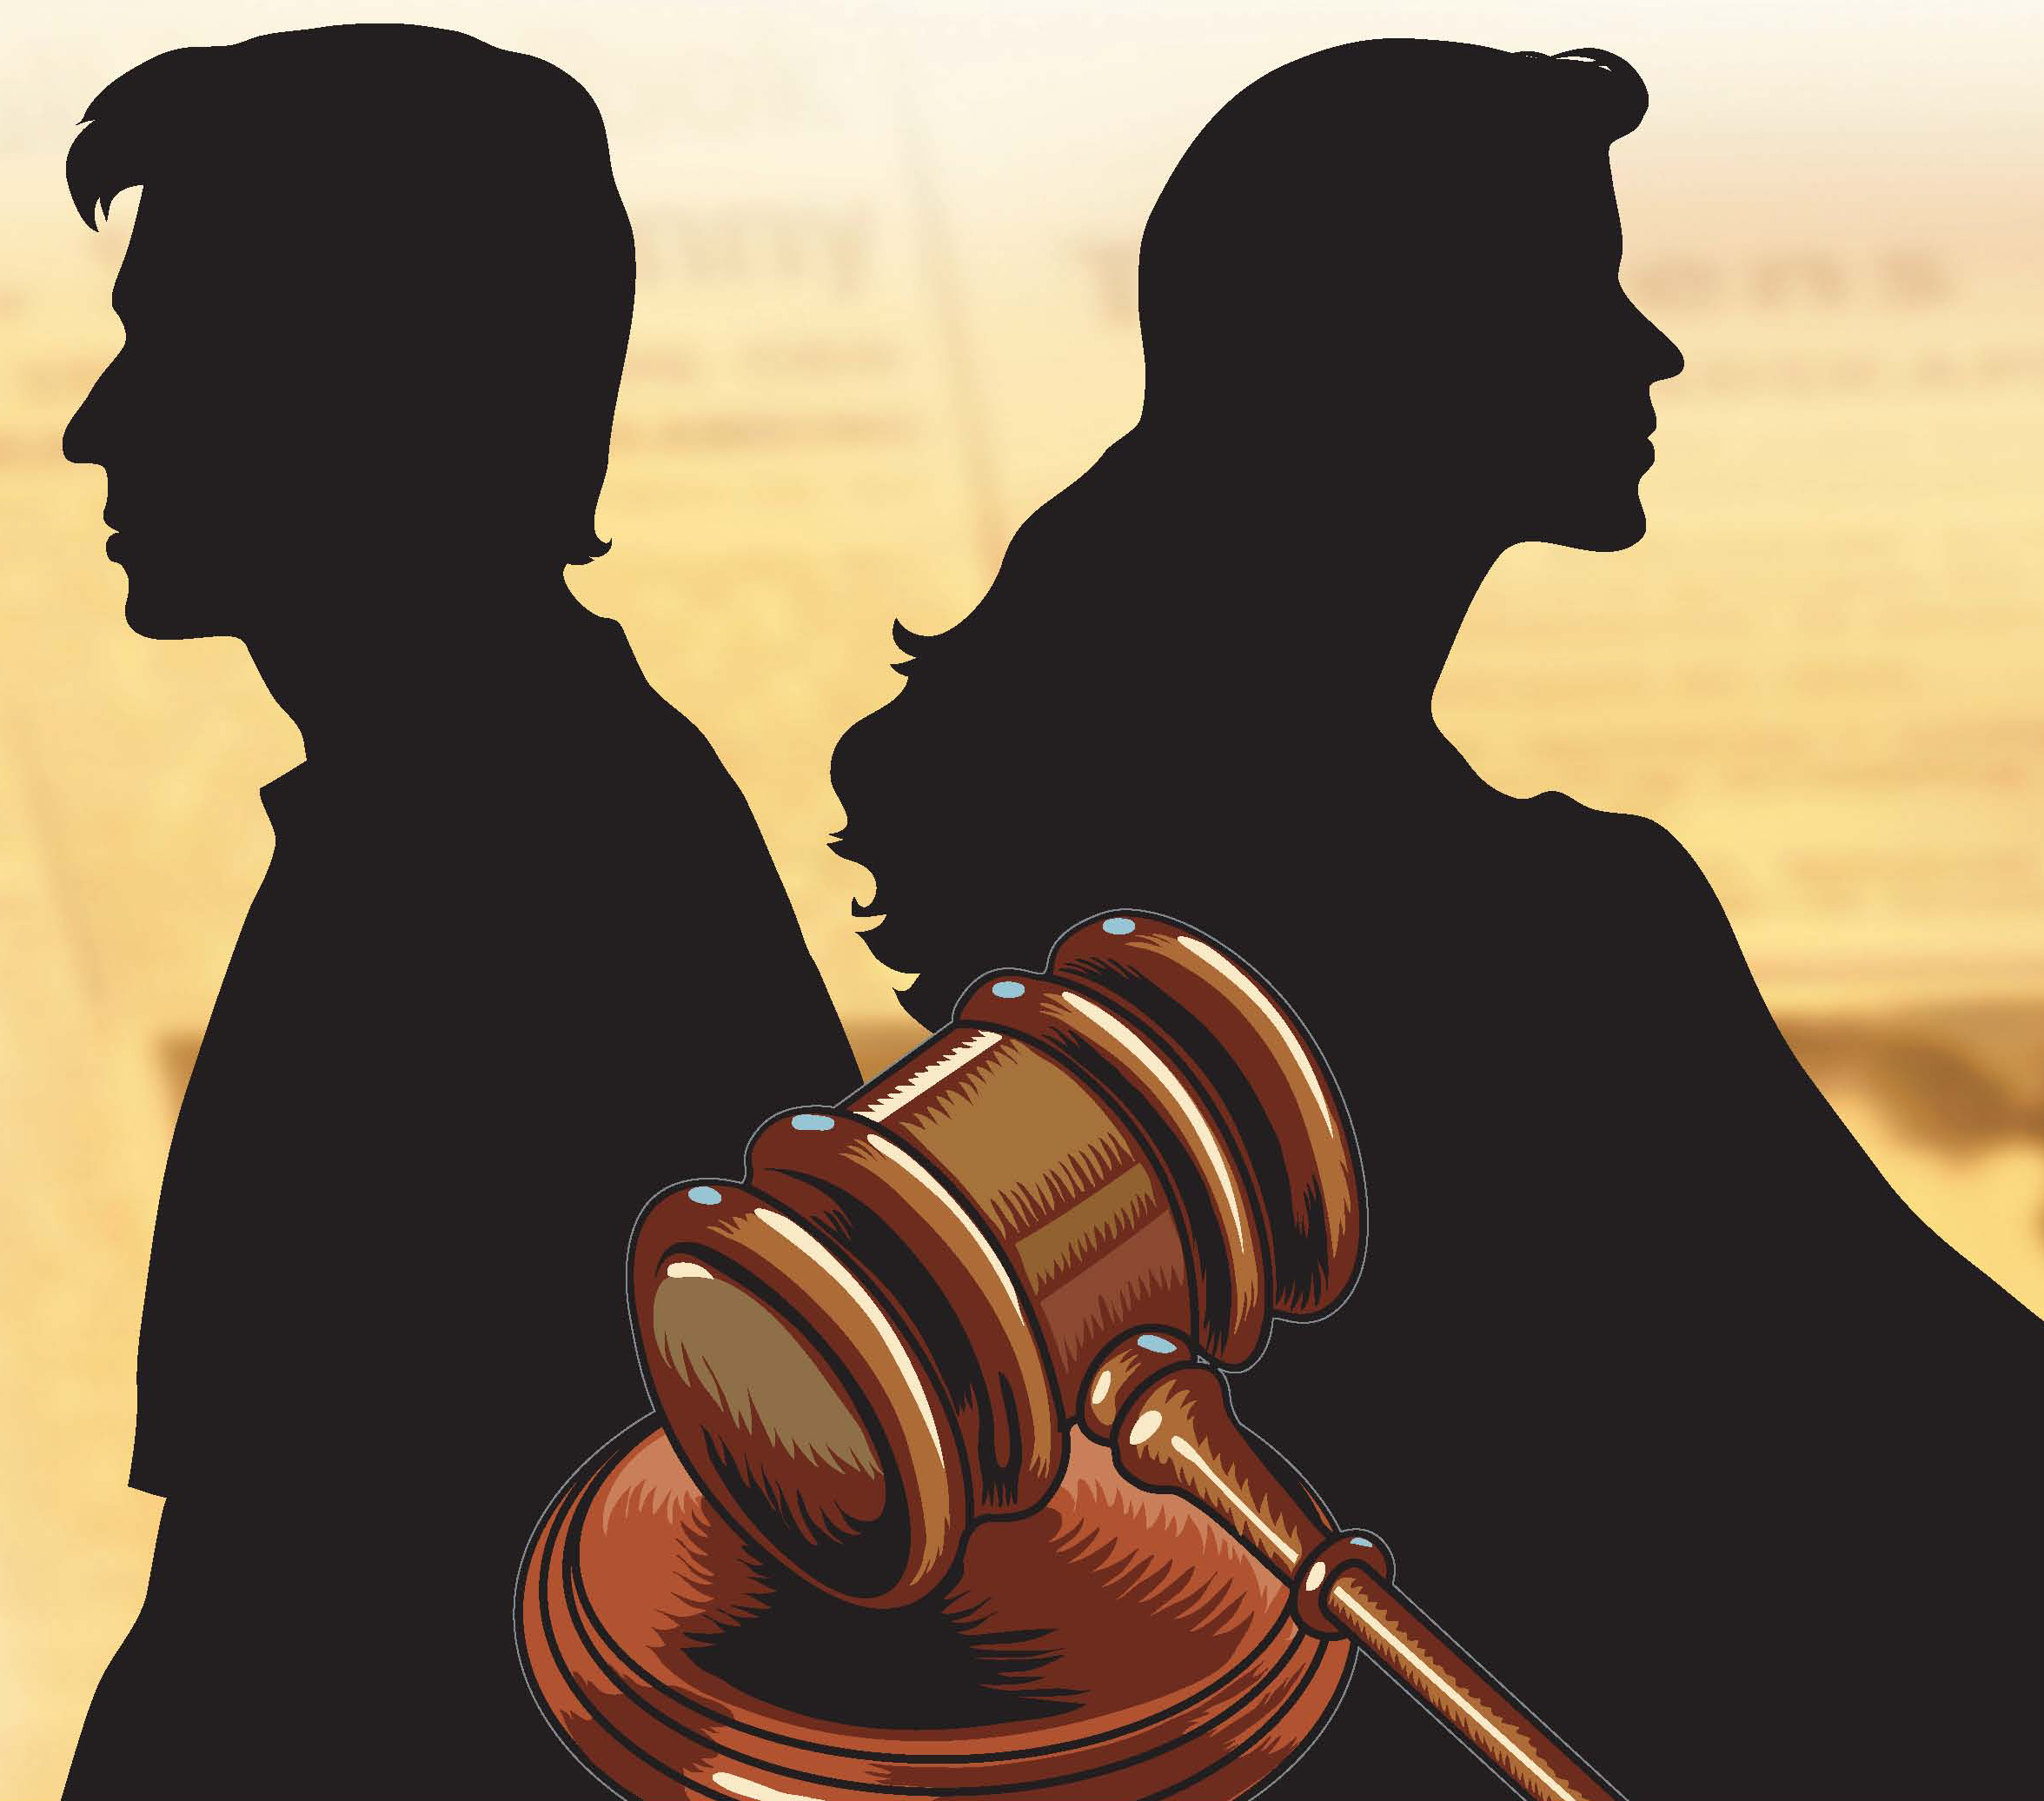 Divorce cases increase in Rupandehi